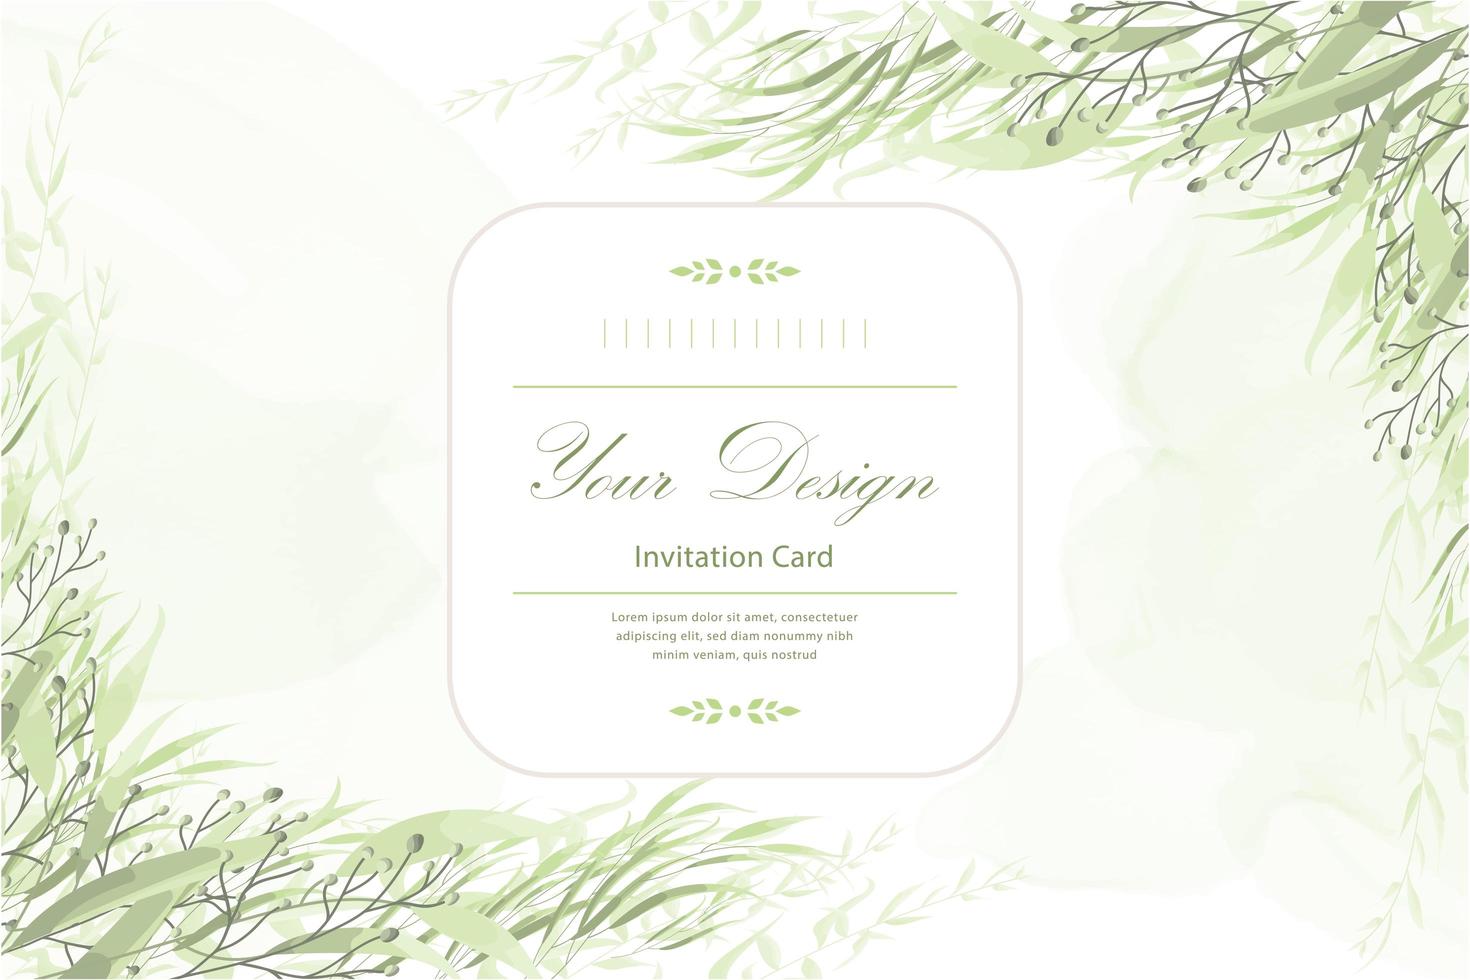 Floral invitation card vector